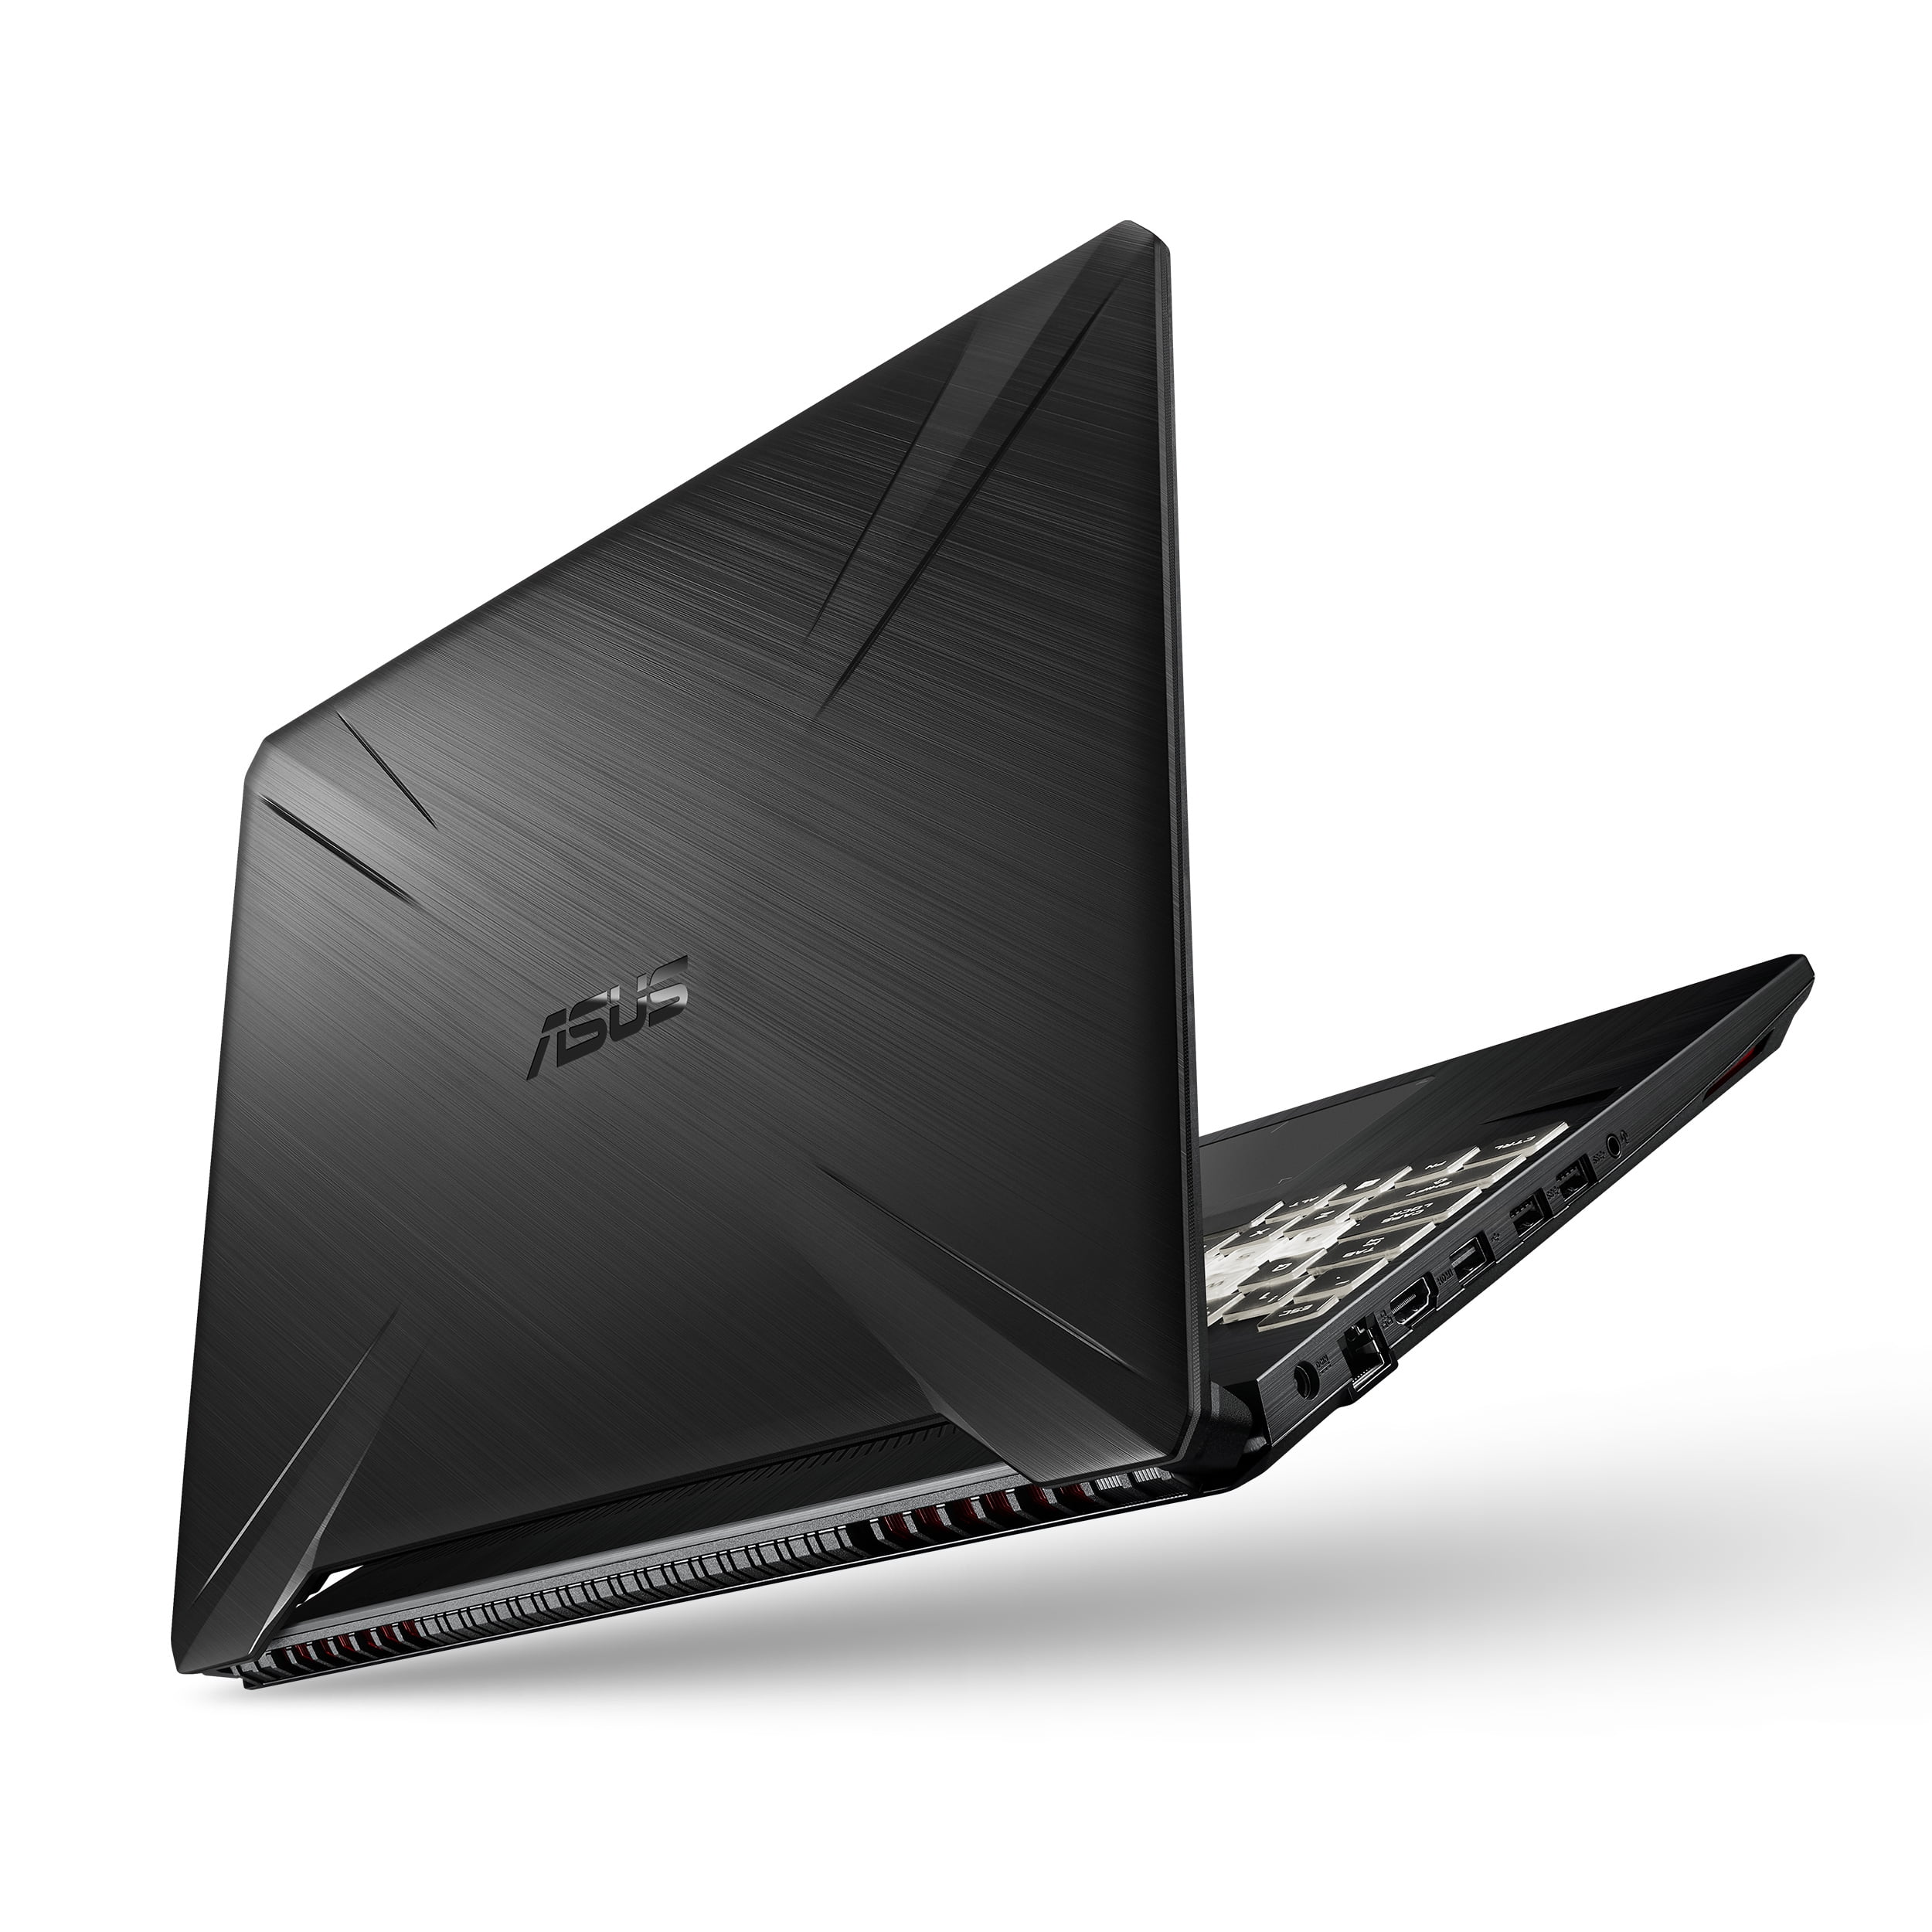 ASUS 15.6 FHD Gaming Laptop, AMD Ryzen 7 R7-3750H, 8GB RAM, NVIDIA GeForce GTX  1650 4GB, 256GB SSD, Windows 10 Home, Black, FX505DT-WB72 